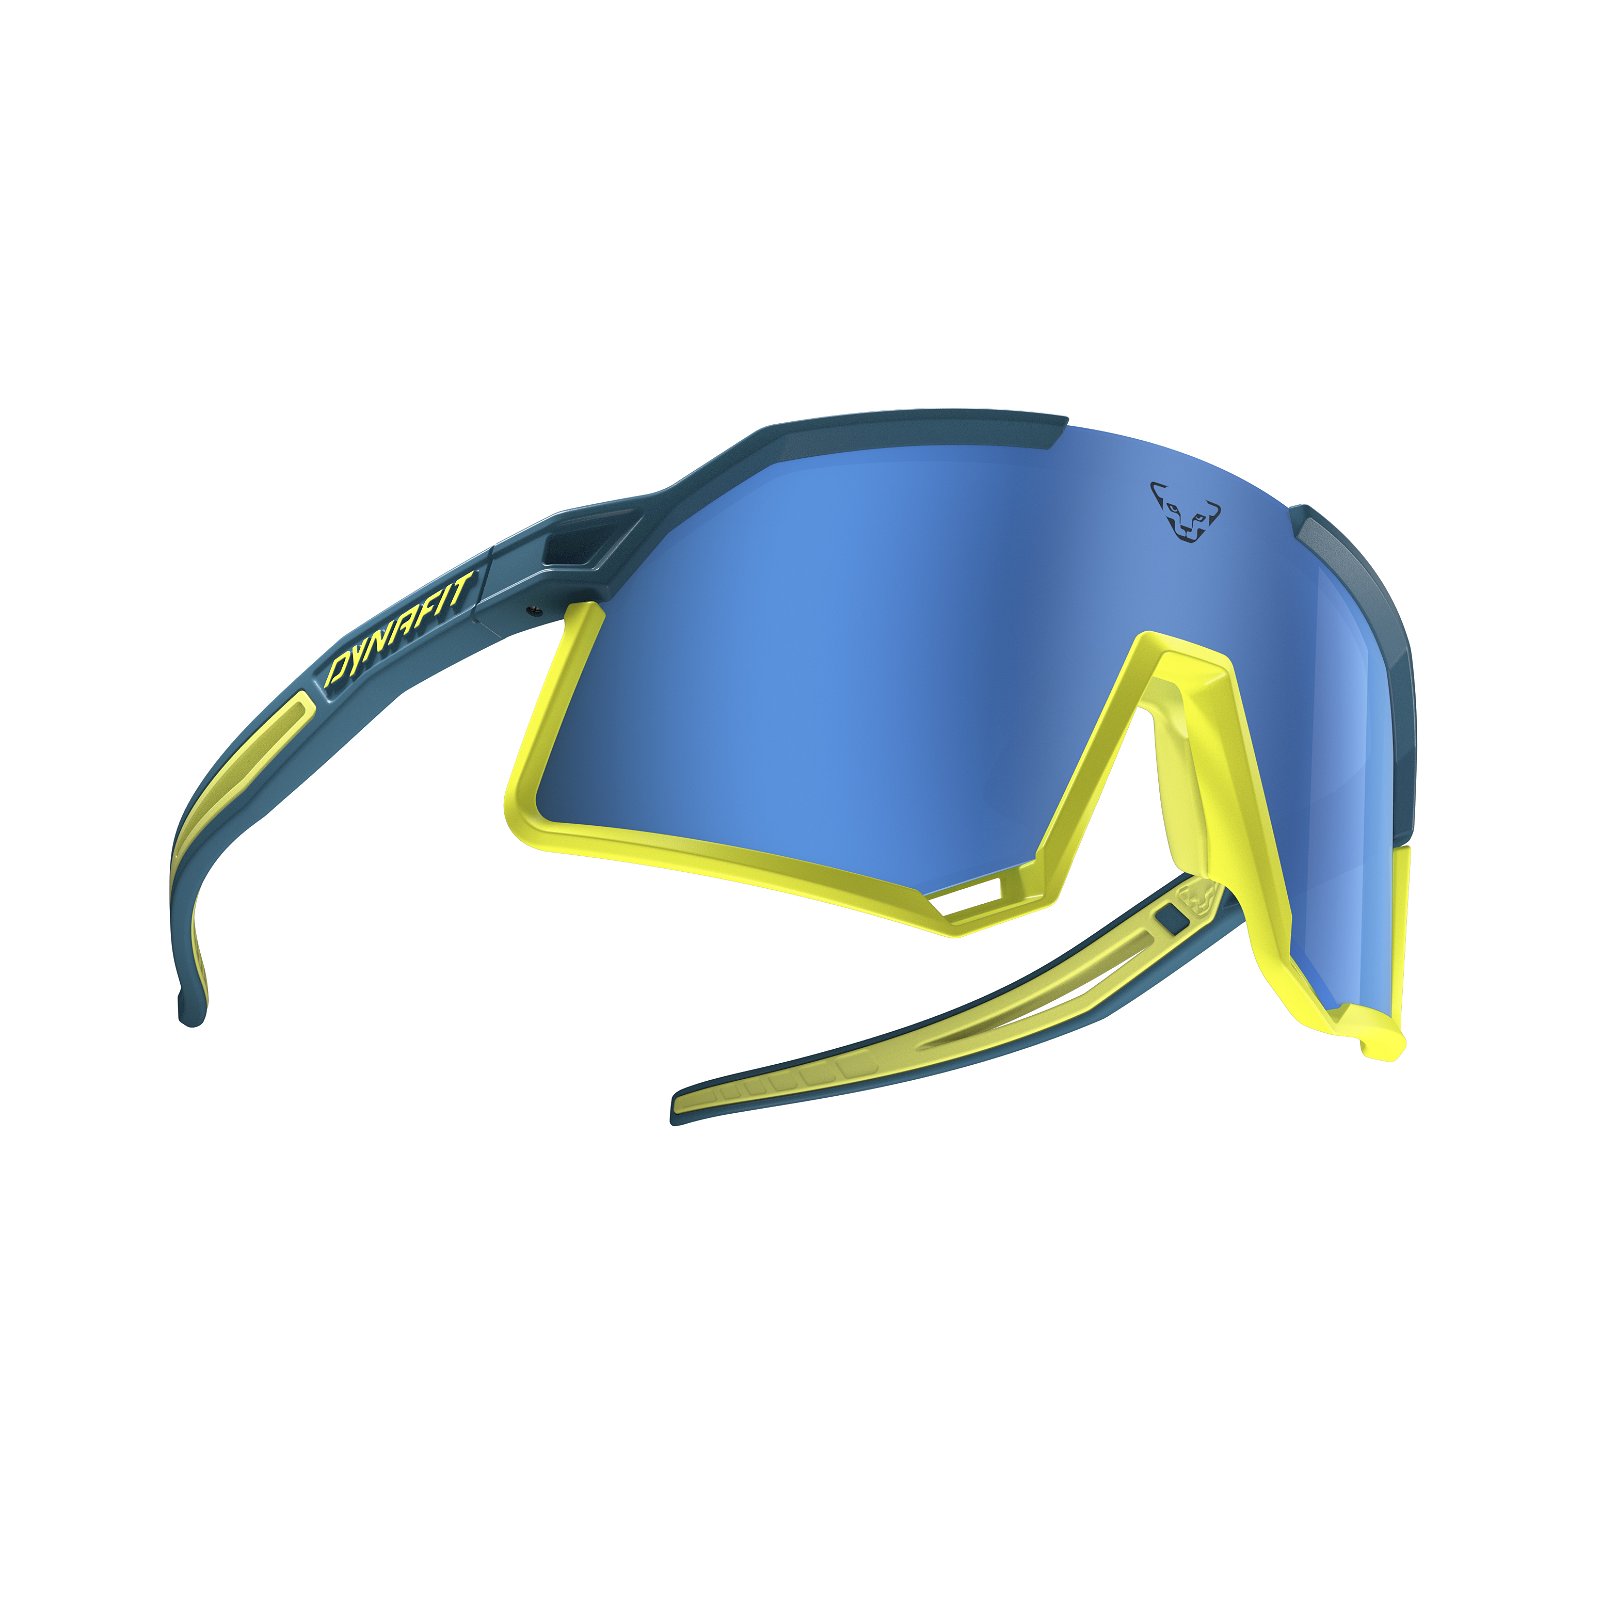 Dynafit Trail Evo Sunglasses